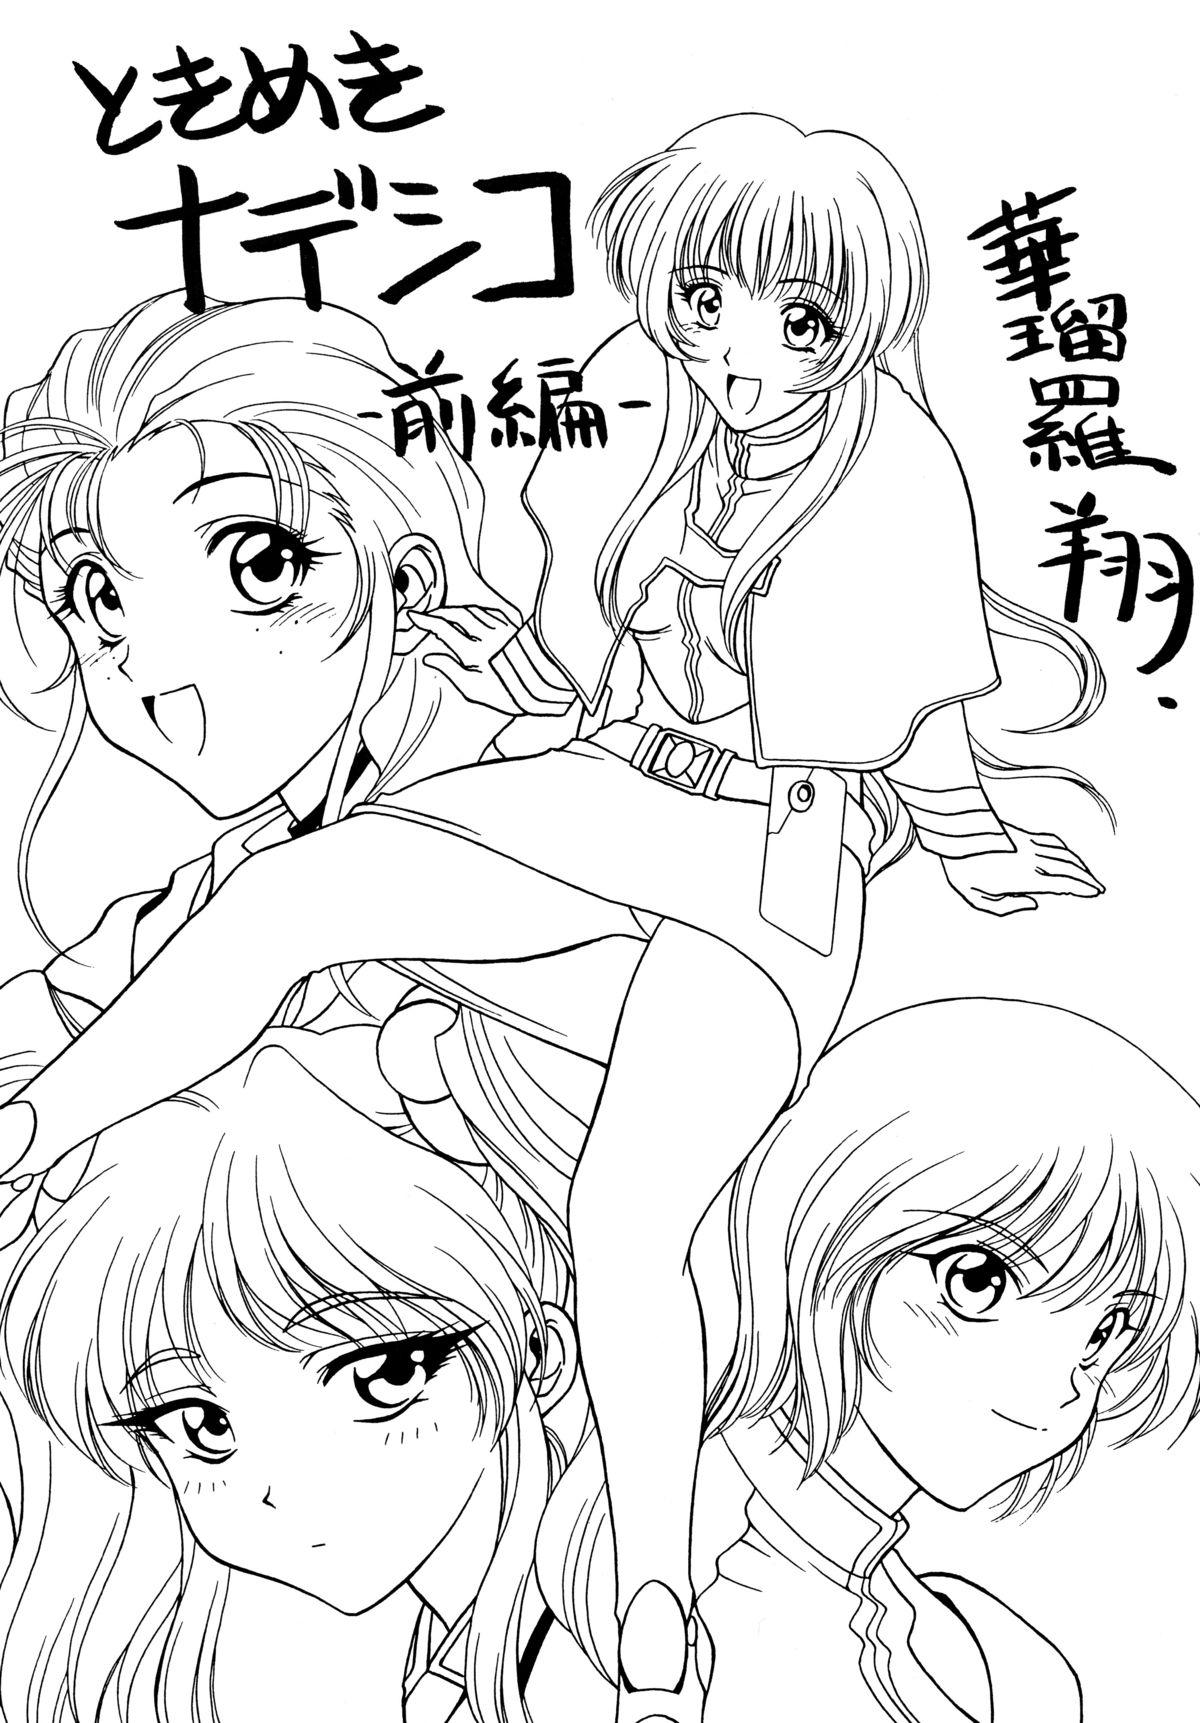 Porn LOVE² BREATH - Sakura taisen Martian successor nadesico Tokimeki memorial Youre under arrest Xxx - Page 11